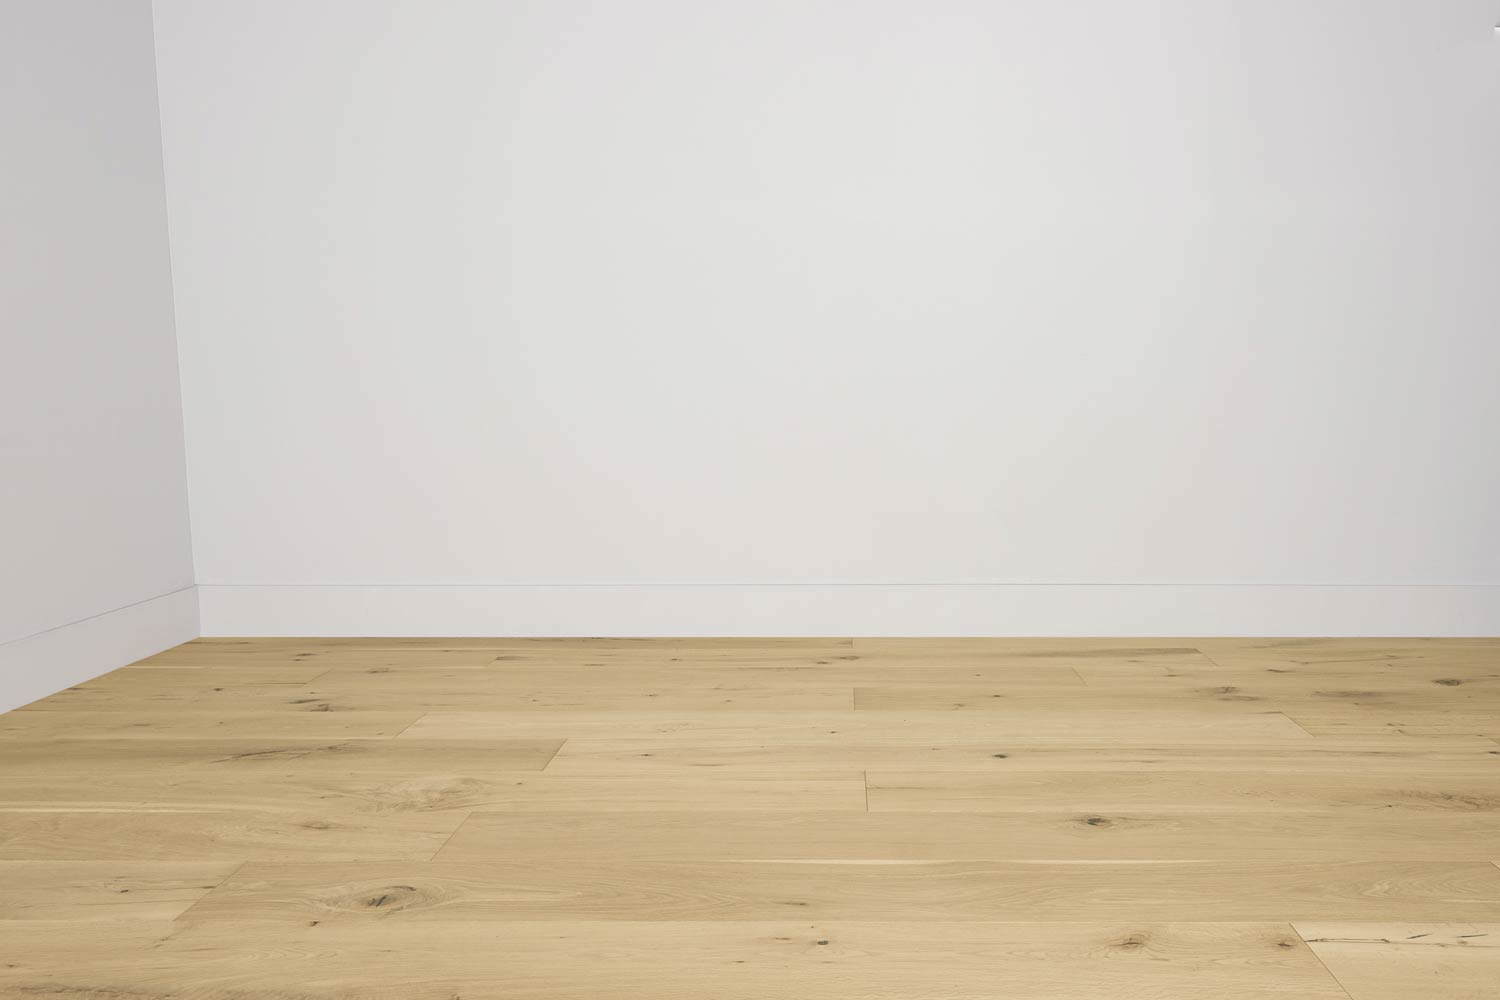 Campania 7-1/2″ Wide – White Oak Engineered Hardwood Flooring